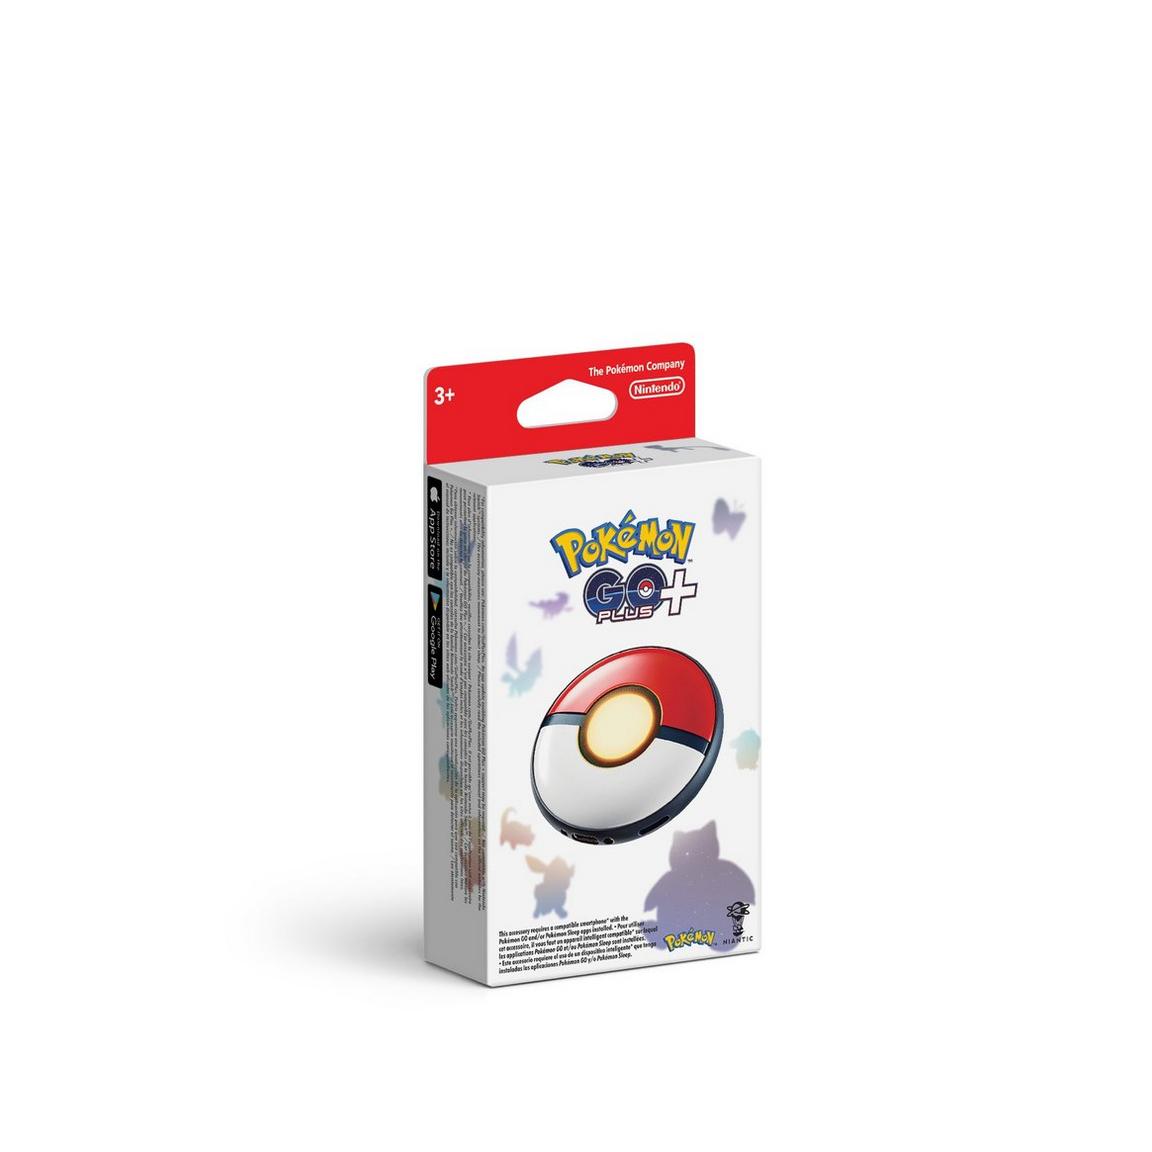 Nanoblock Pokémon - Gyarados – The Keystone Pokéshop